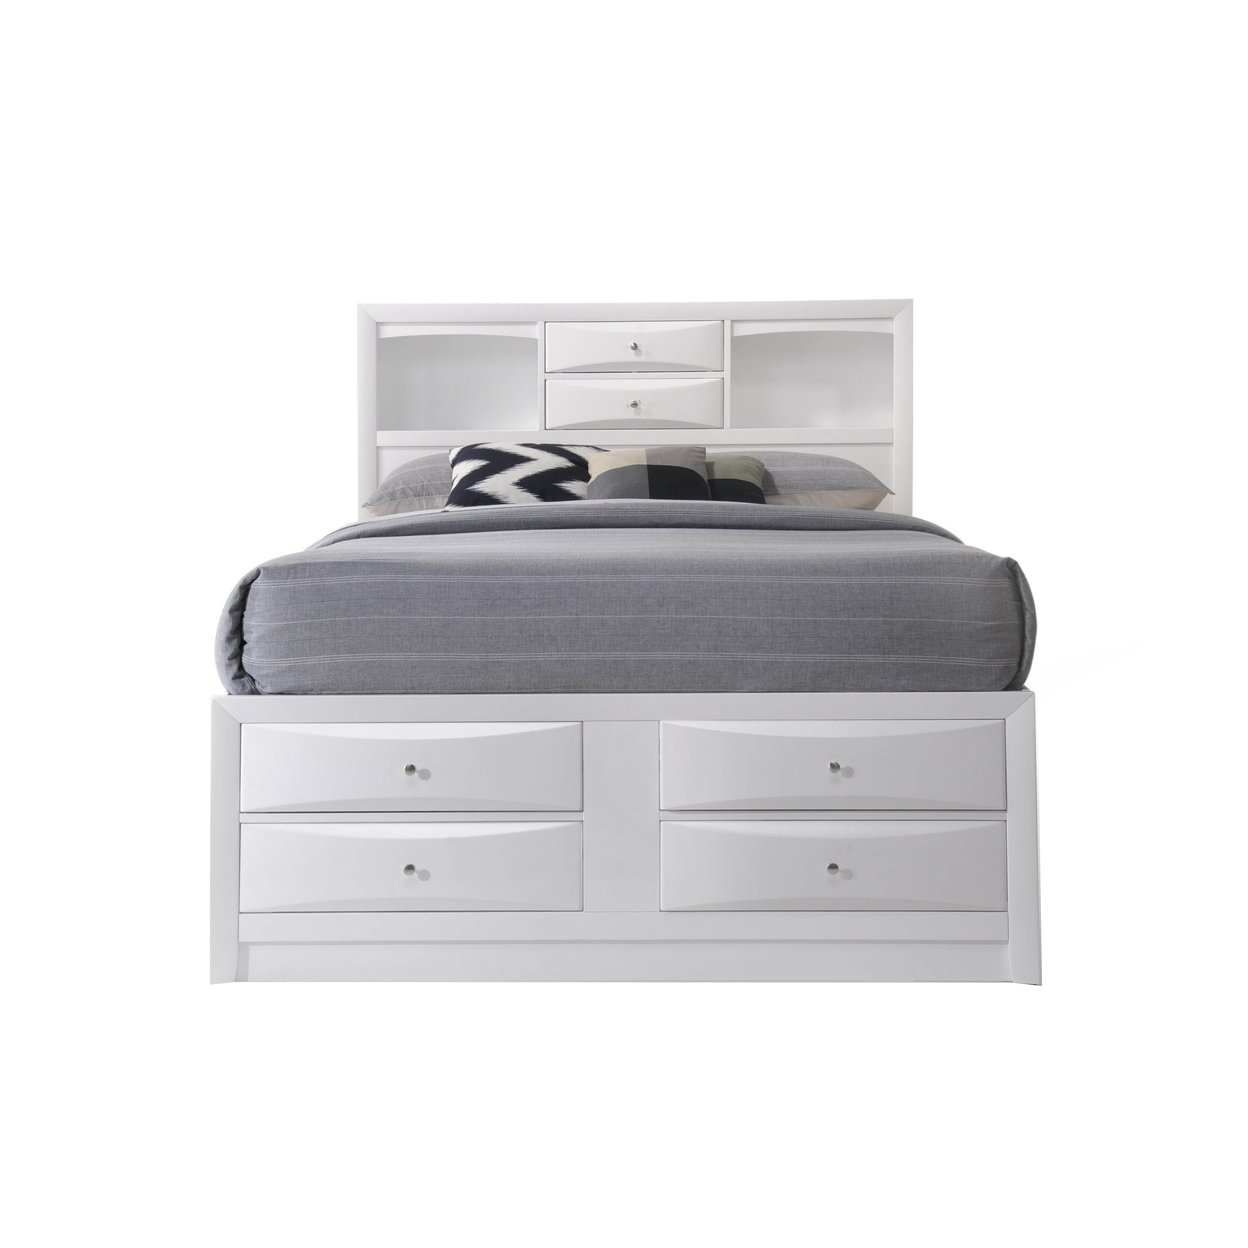 Eight Drawer Full Size Storage Bed With Bookcase Headboard, White- Saltoro Sherpi